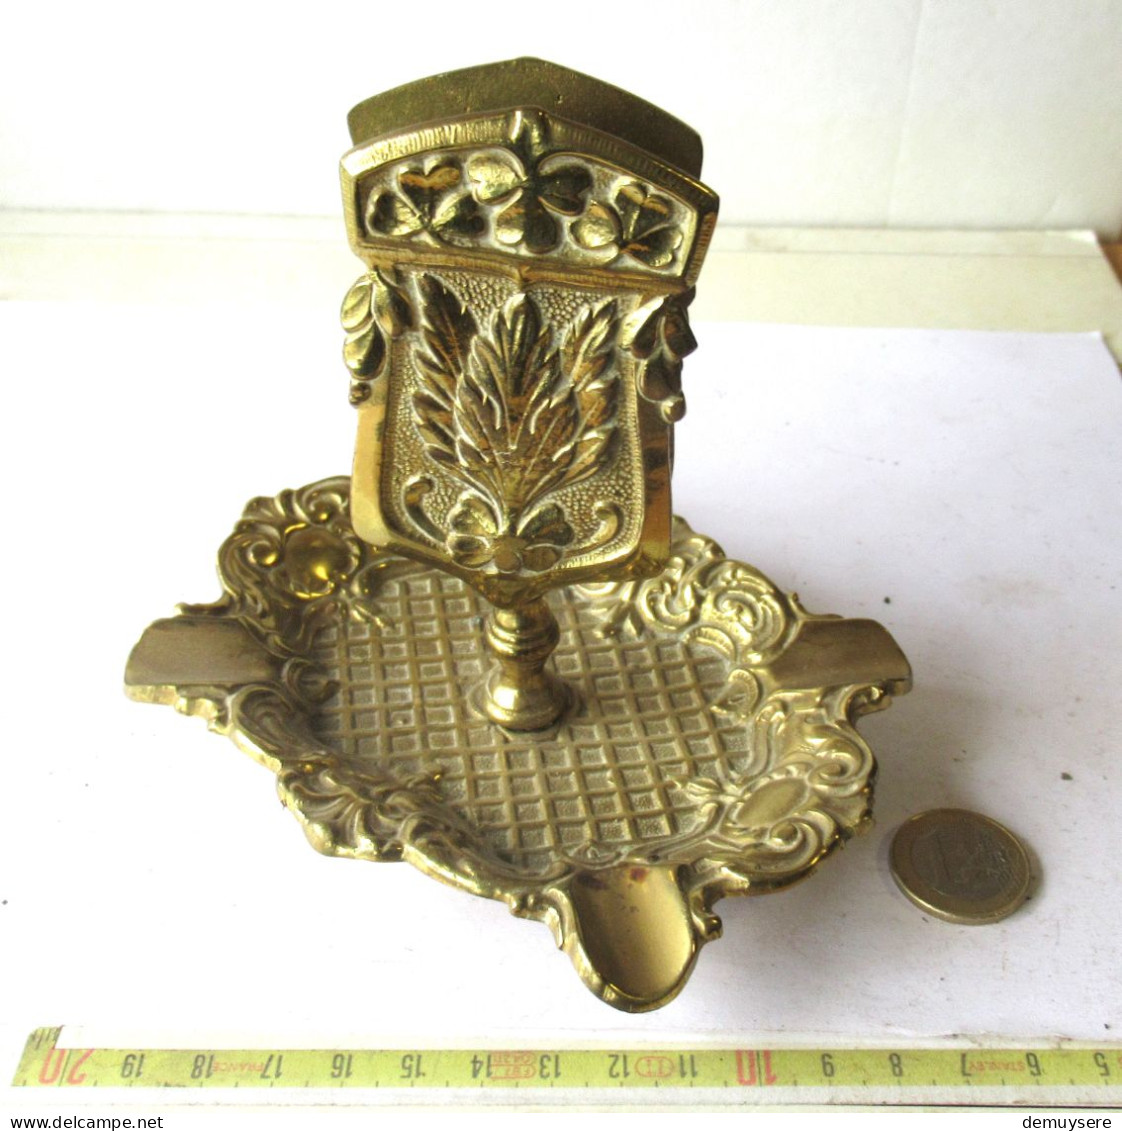 Lade 2000 - Bronzen Asbak Met Luciferhouder - Cendrier En Bronze Avec Porte Allumettes - 500 Gram - Bronzes